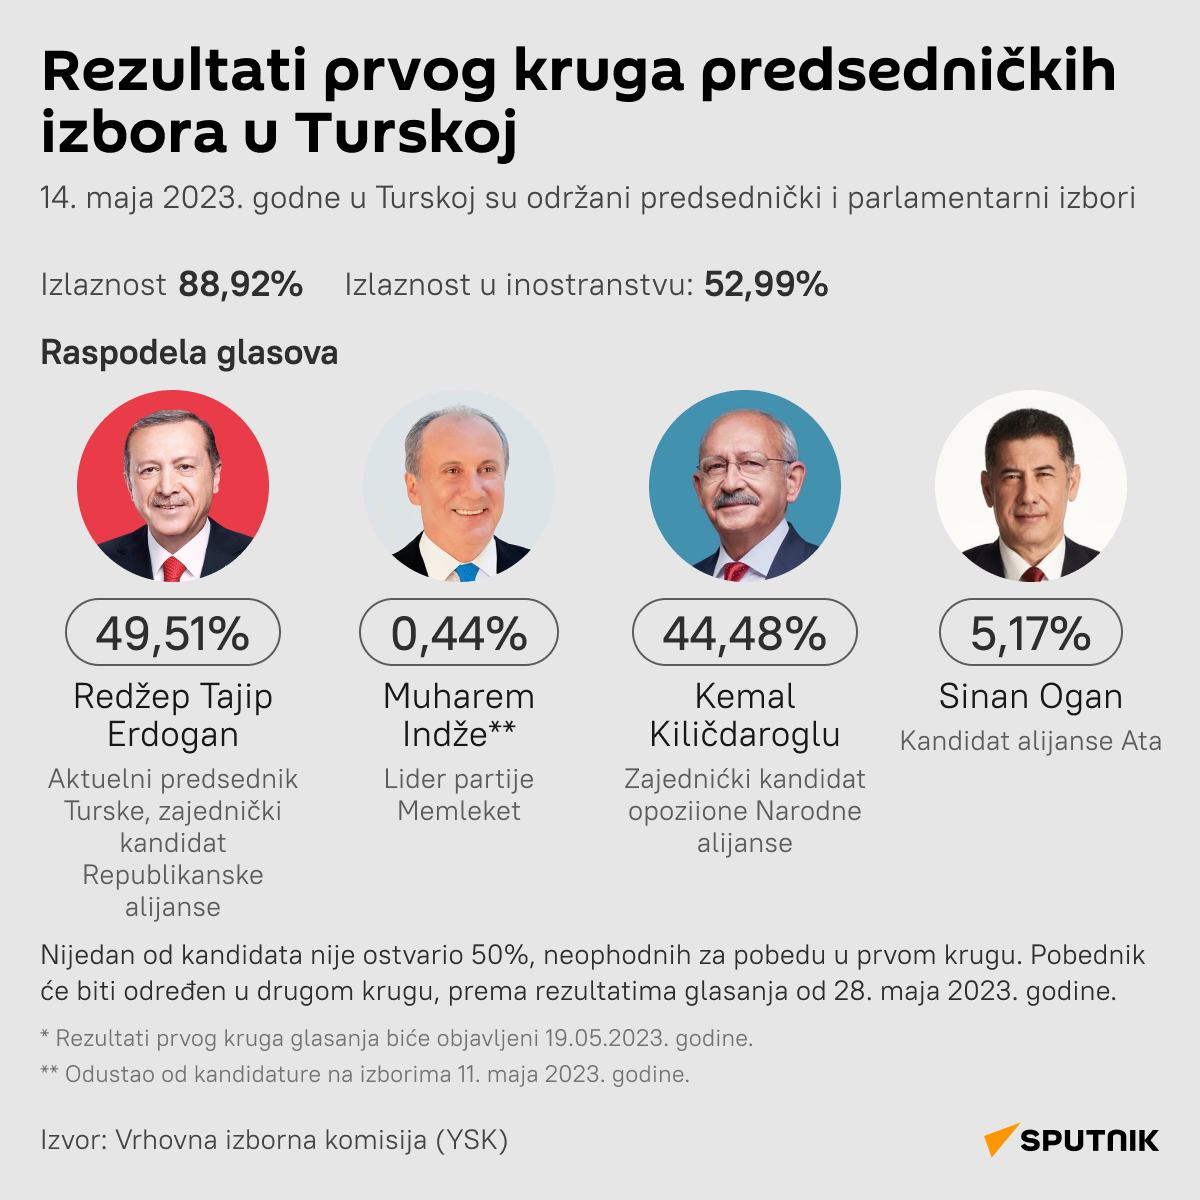 Infografika Turska predsednički izbori rezultati Latinica desk - Sputnik Srbija